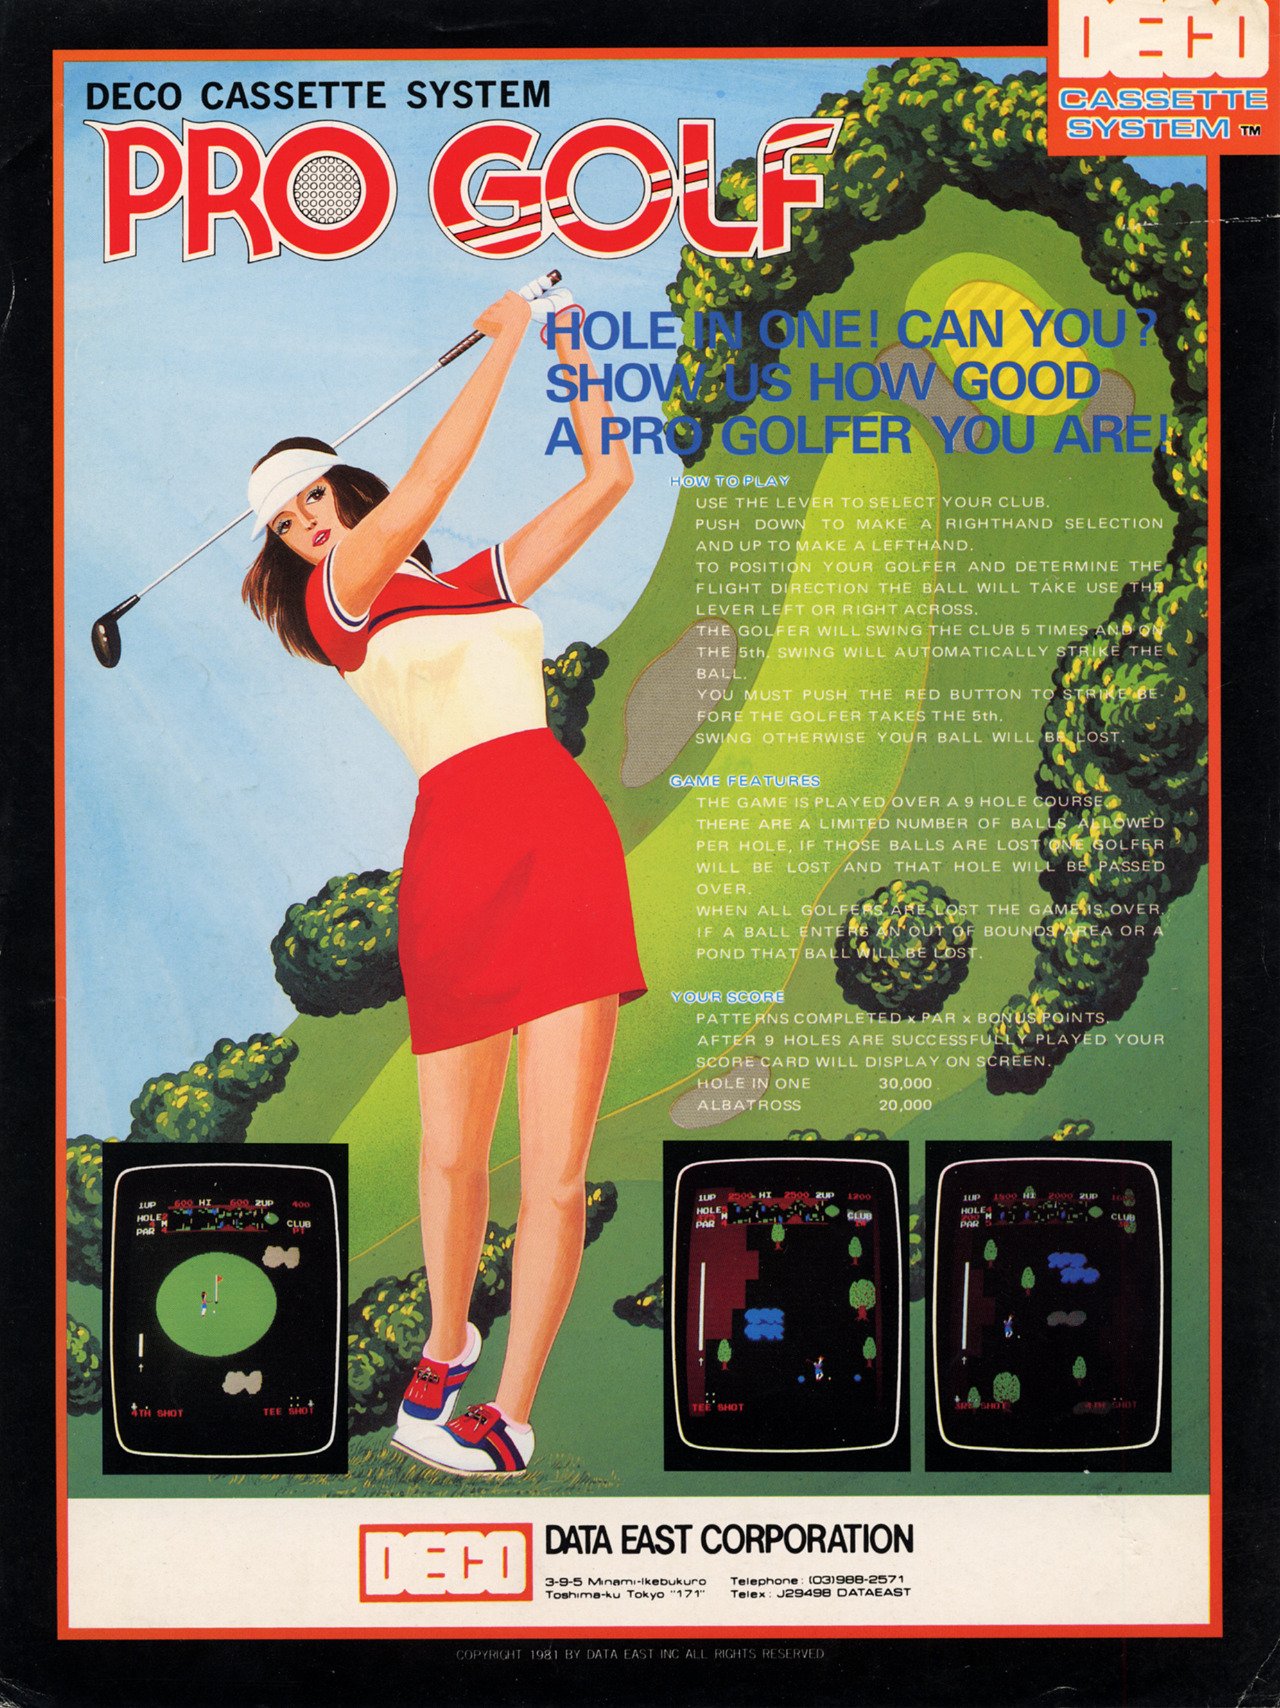 18 Holes Pro Golf